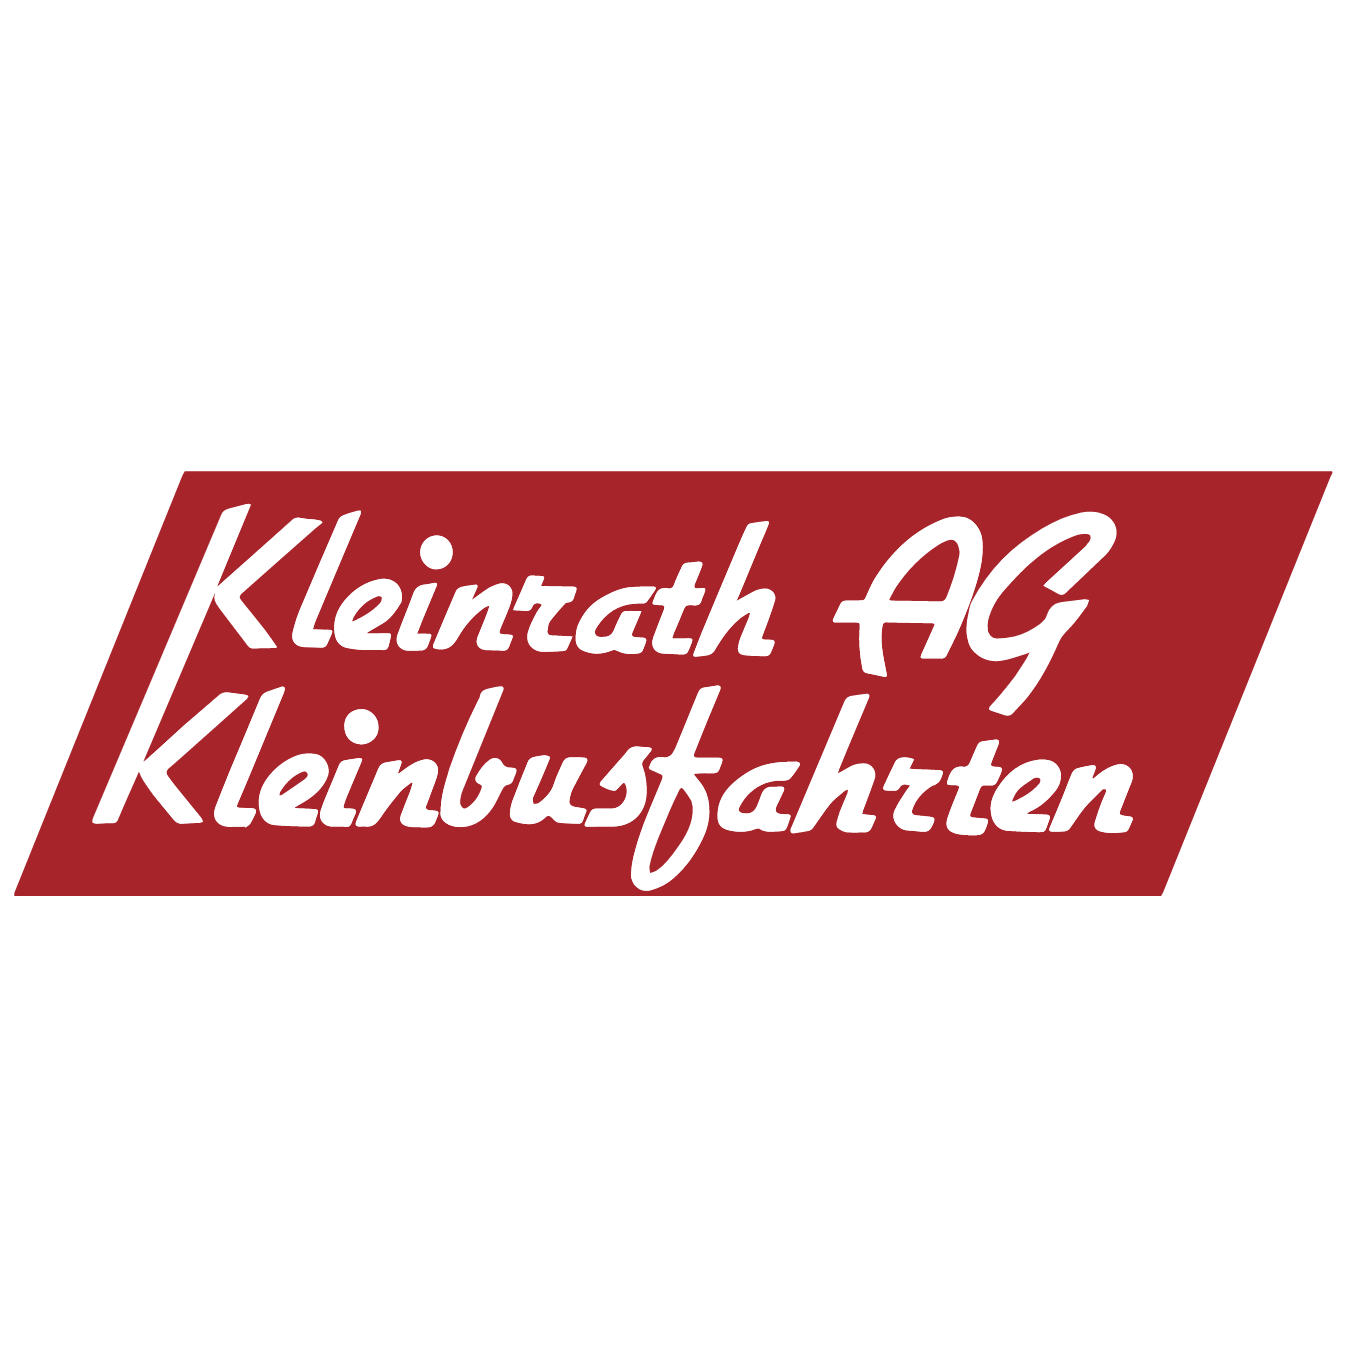 Kleinrath AG